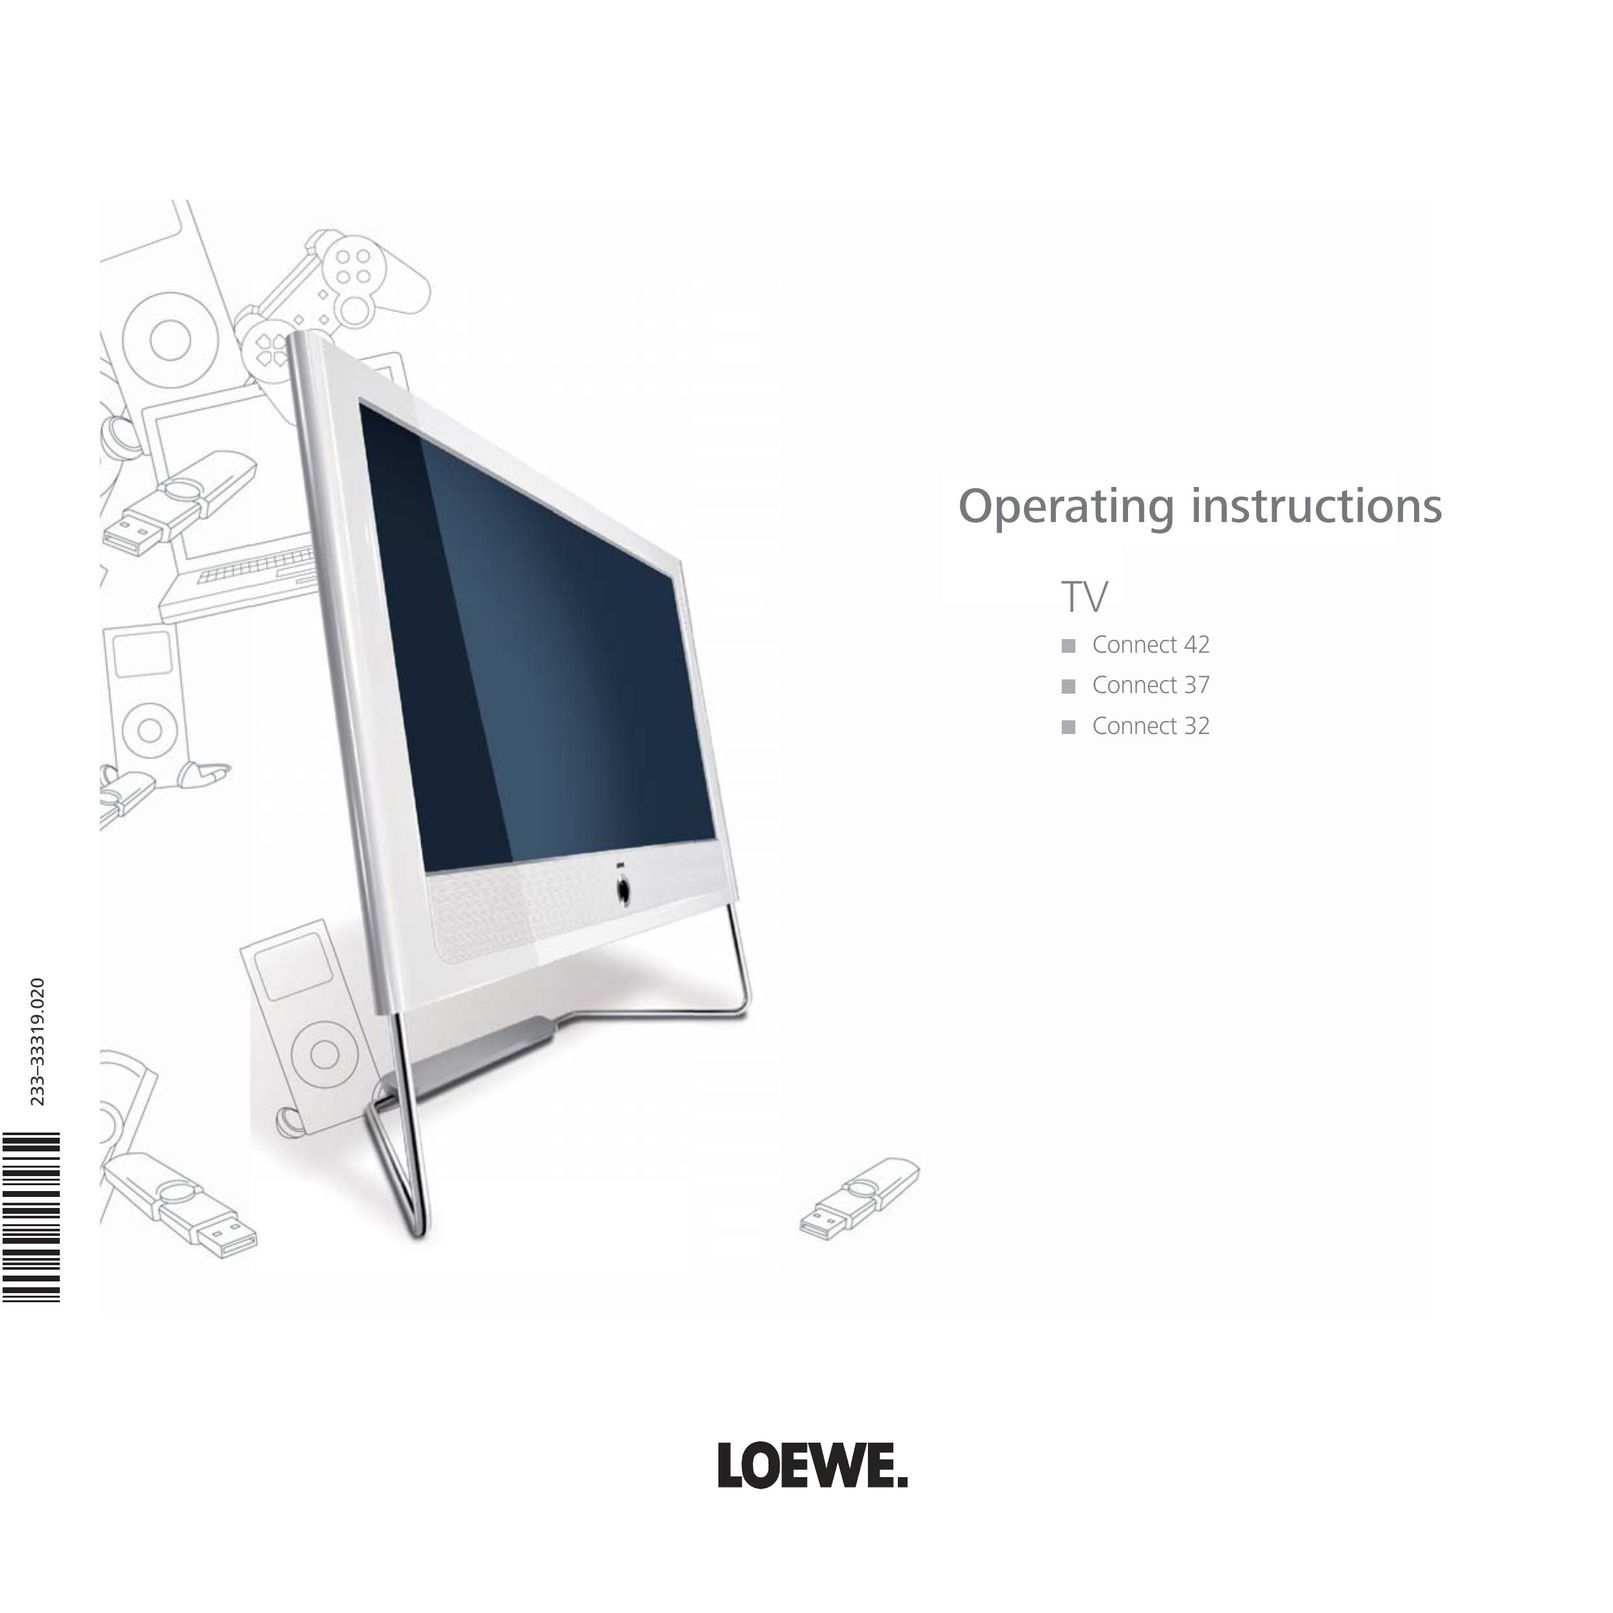 Loewe 42 Car Satellite TV System User Manual